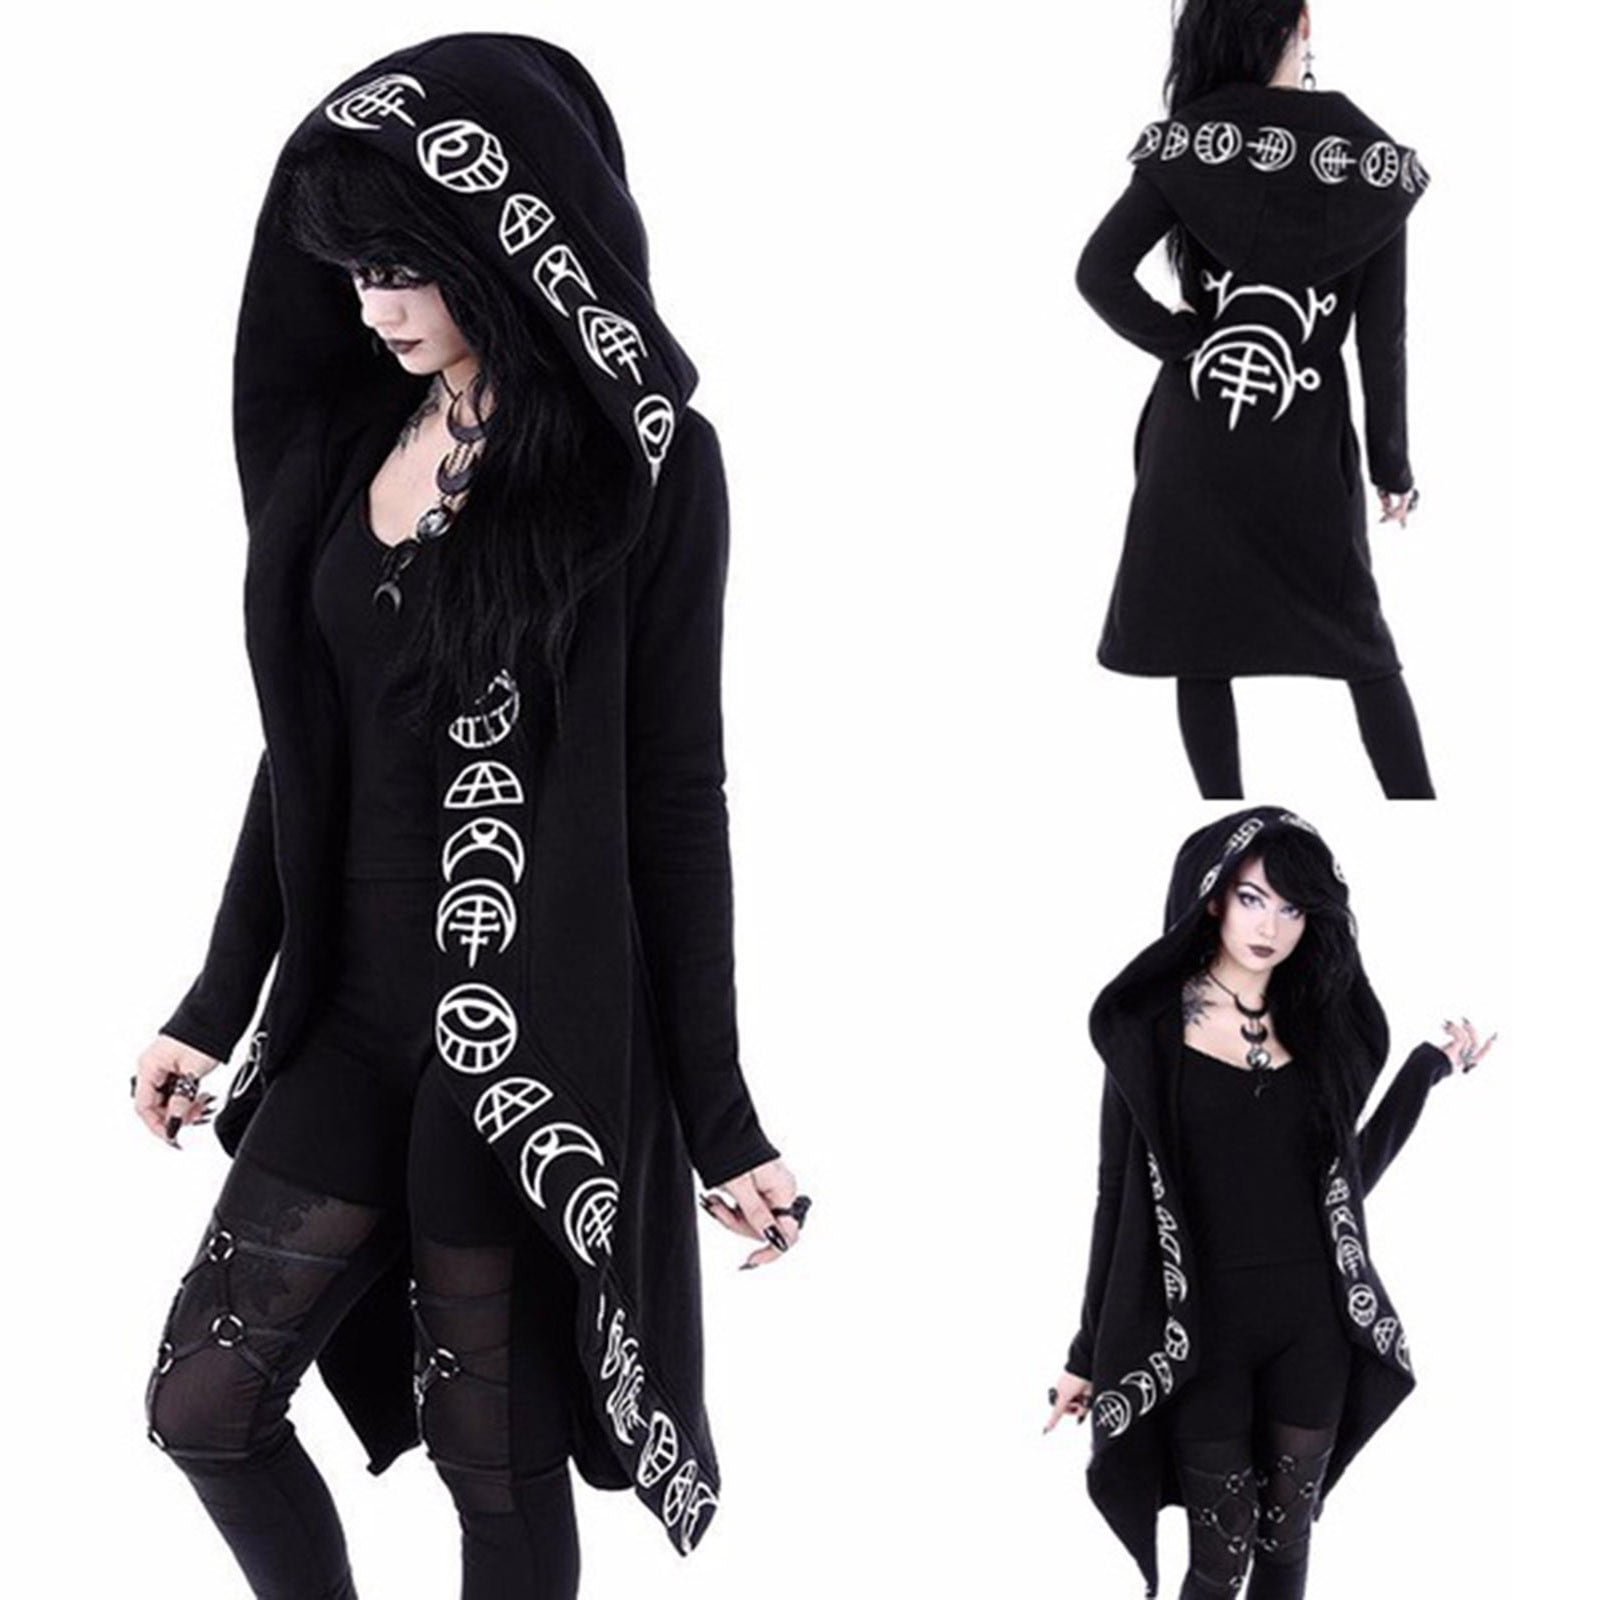 Hoodies for Women,Loose Gothic Punk Long Sleeve Hoodie Sweatshirt Print Tops Blouse T-Shirt Dress